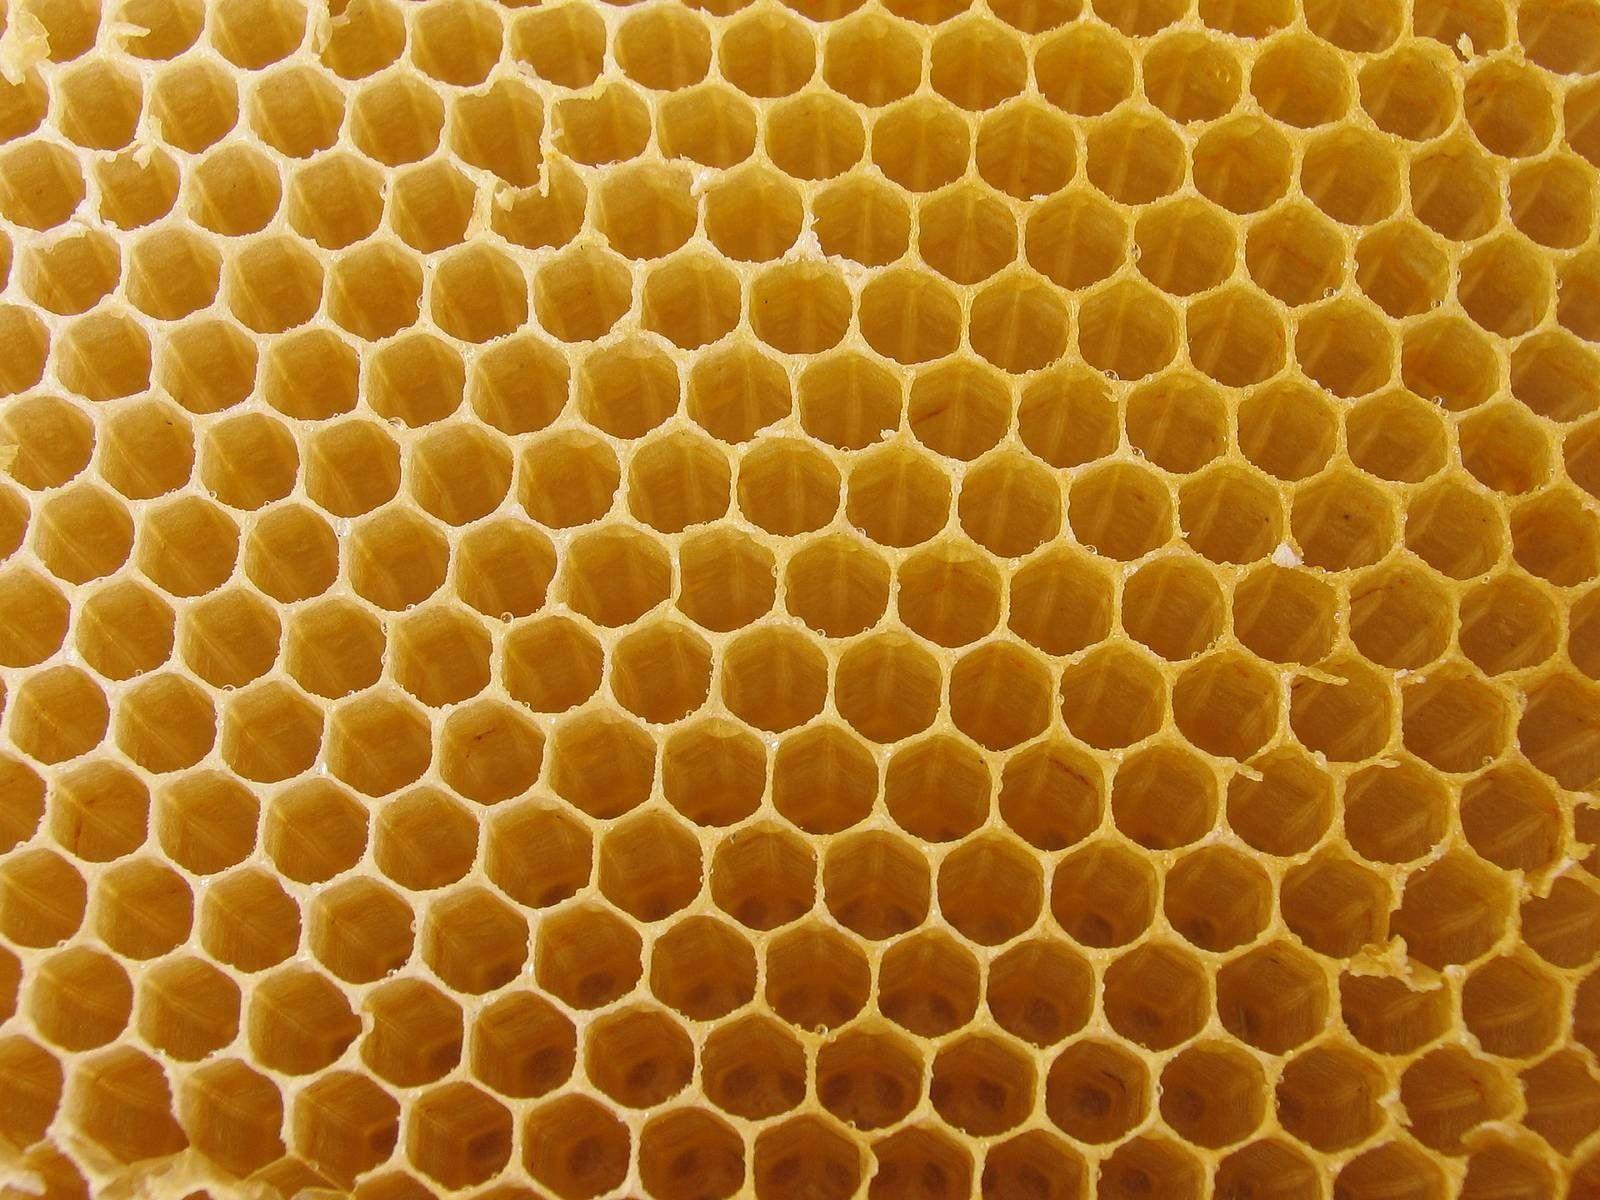 VTT3131: Honeycomb Background In High Quality, B.SCB Wallpaper